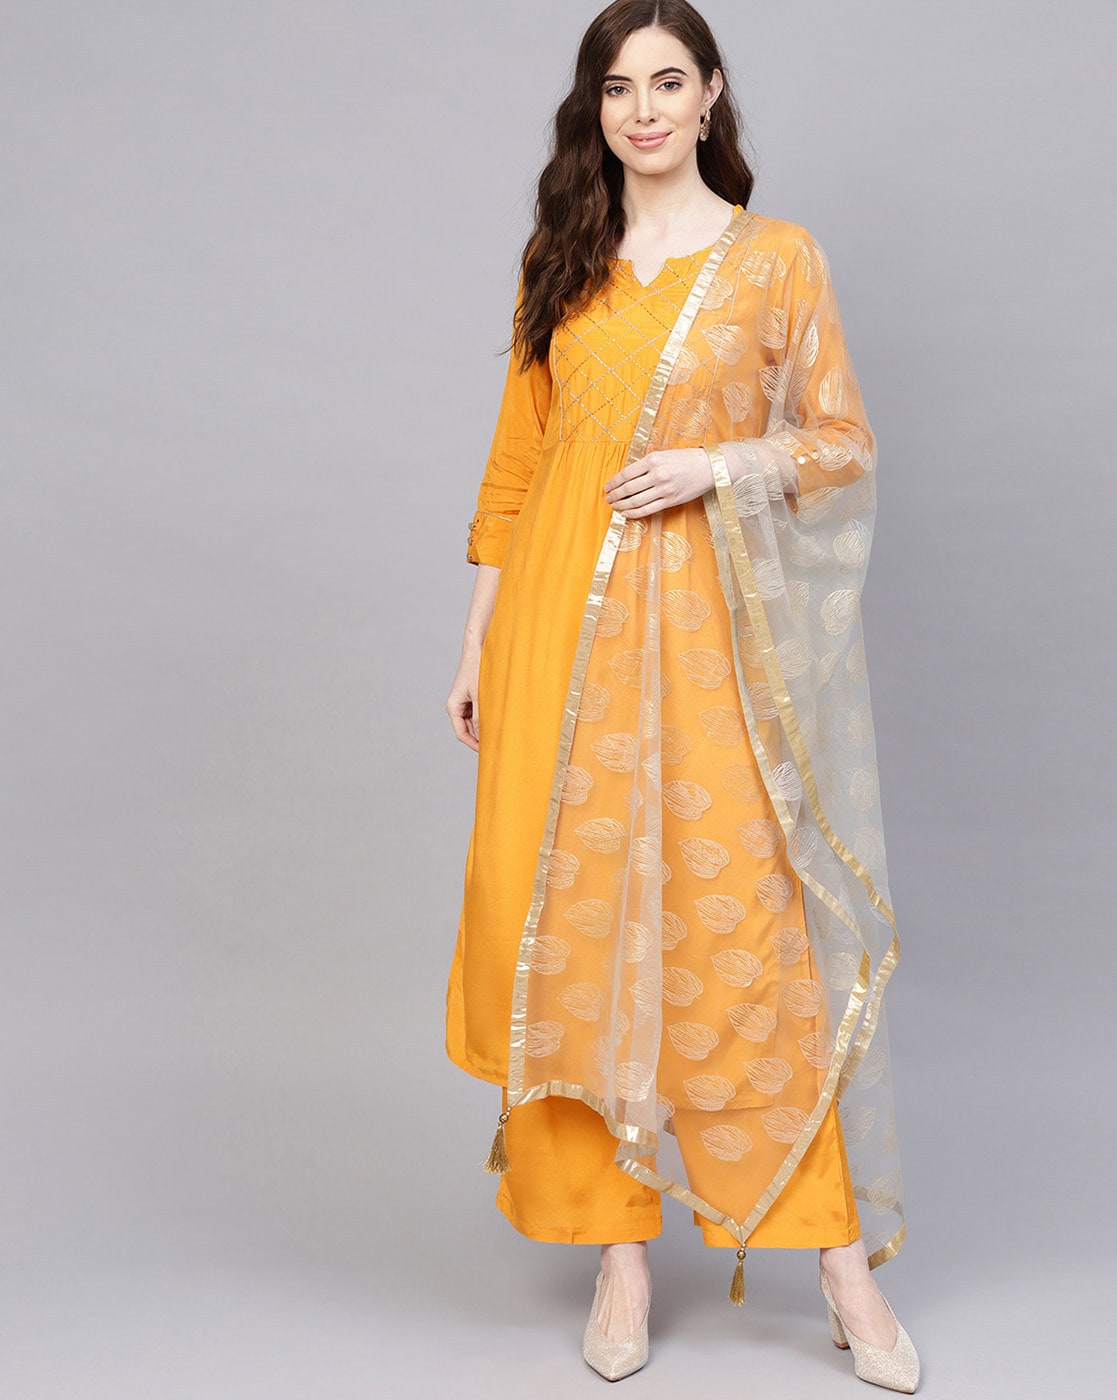 12 Jaipur Kurtis That Will Make You Look Forward to Dressing Up Each ...